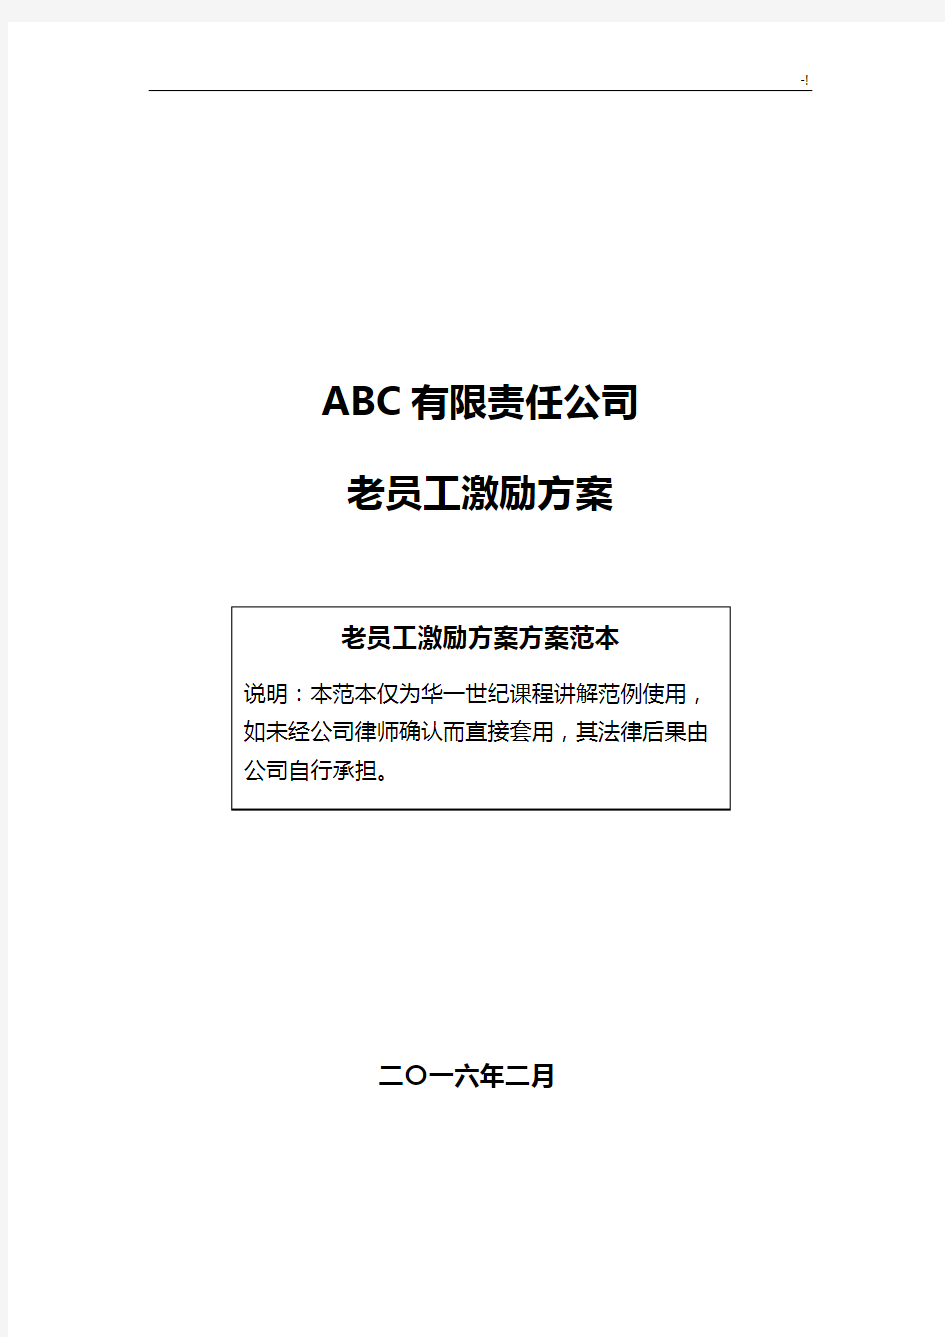 ABC集团公司老员工激励方案计划16版